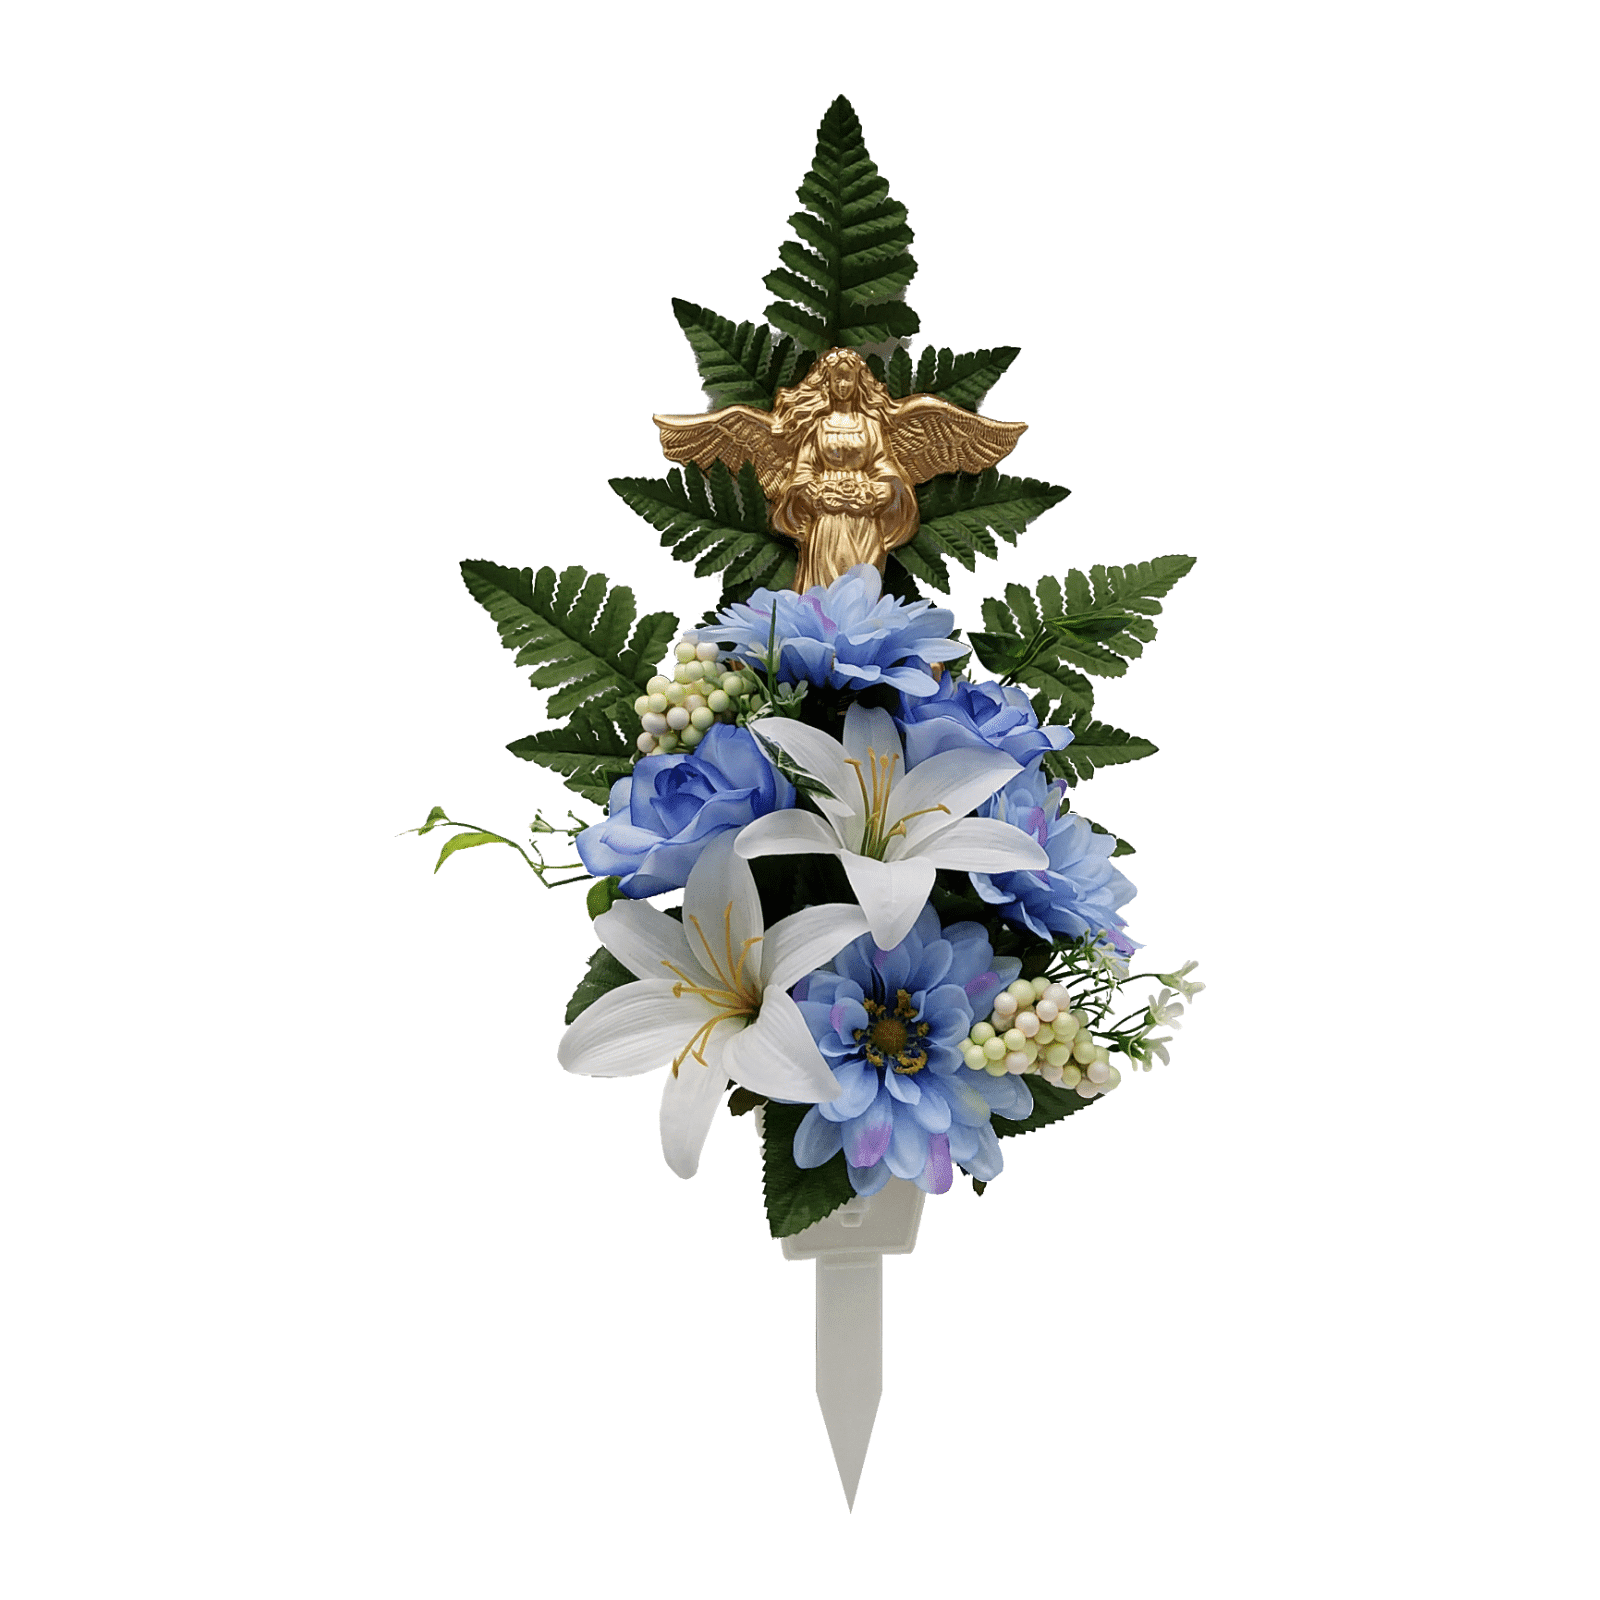 Mainstays 20.5" Artificial Flowers, Memorial Stake, Zinnia, Blue and White Color, Angel Decor.